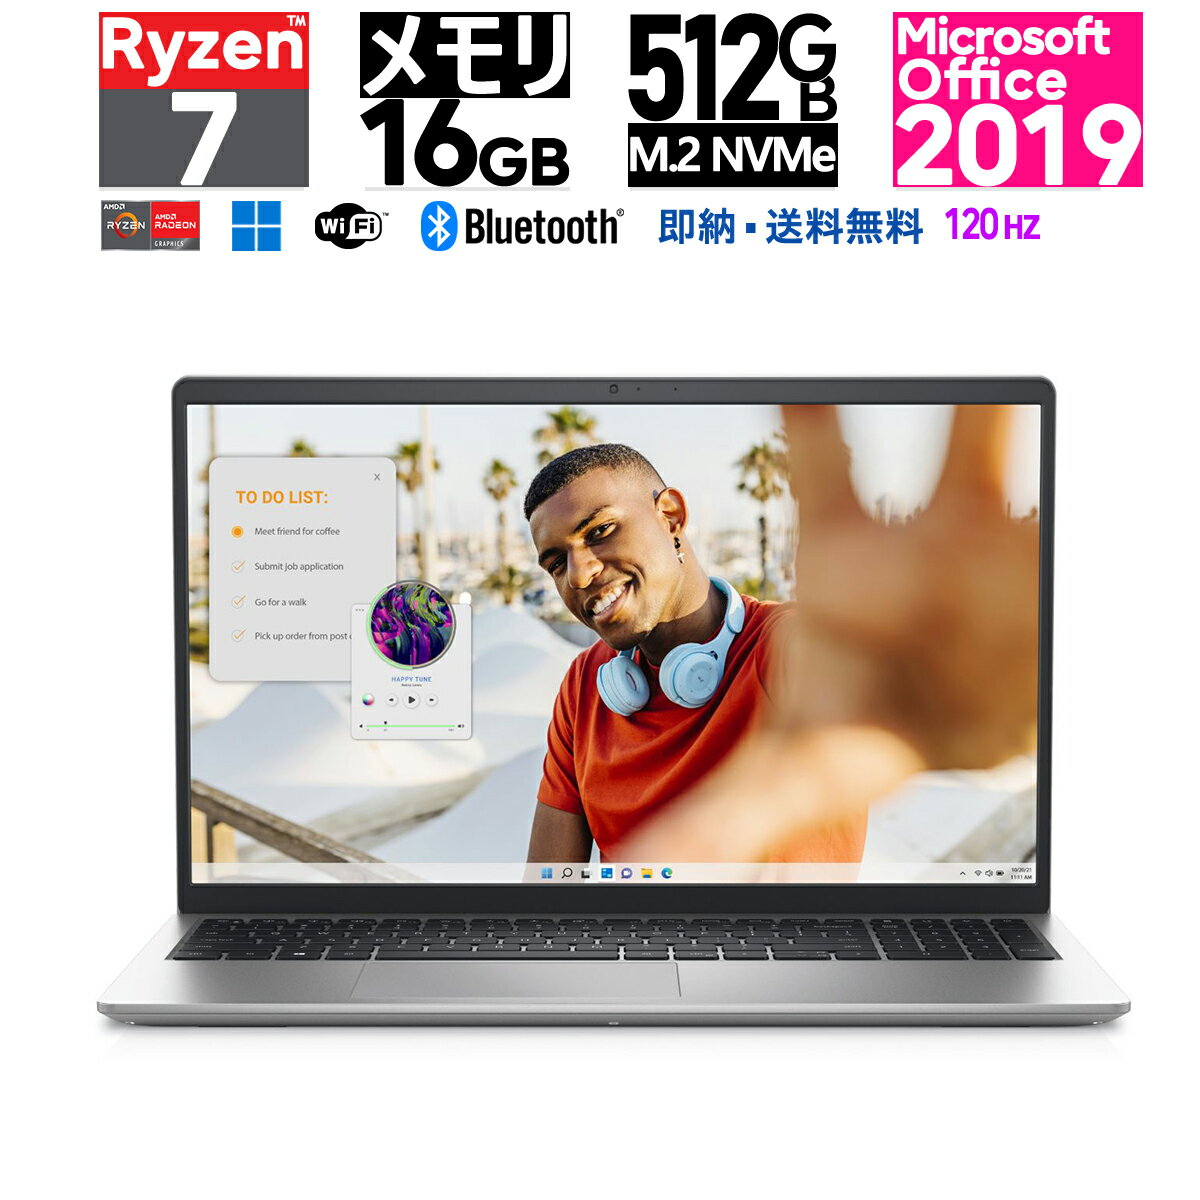 Dell 15.6^ Inspiron 15 Ryzen 7 5700UE16GBE512GB SSD AMD Ryzen 7 5700U 8RA F16GB M.2 SSDF512GB m[gp\R,m[gPC Windows 11 Home Wi-Fi WebJ Bluetooth eL[ tbV[g:120 Hz Office 2019 15amdryzen716g512gwifioffice